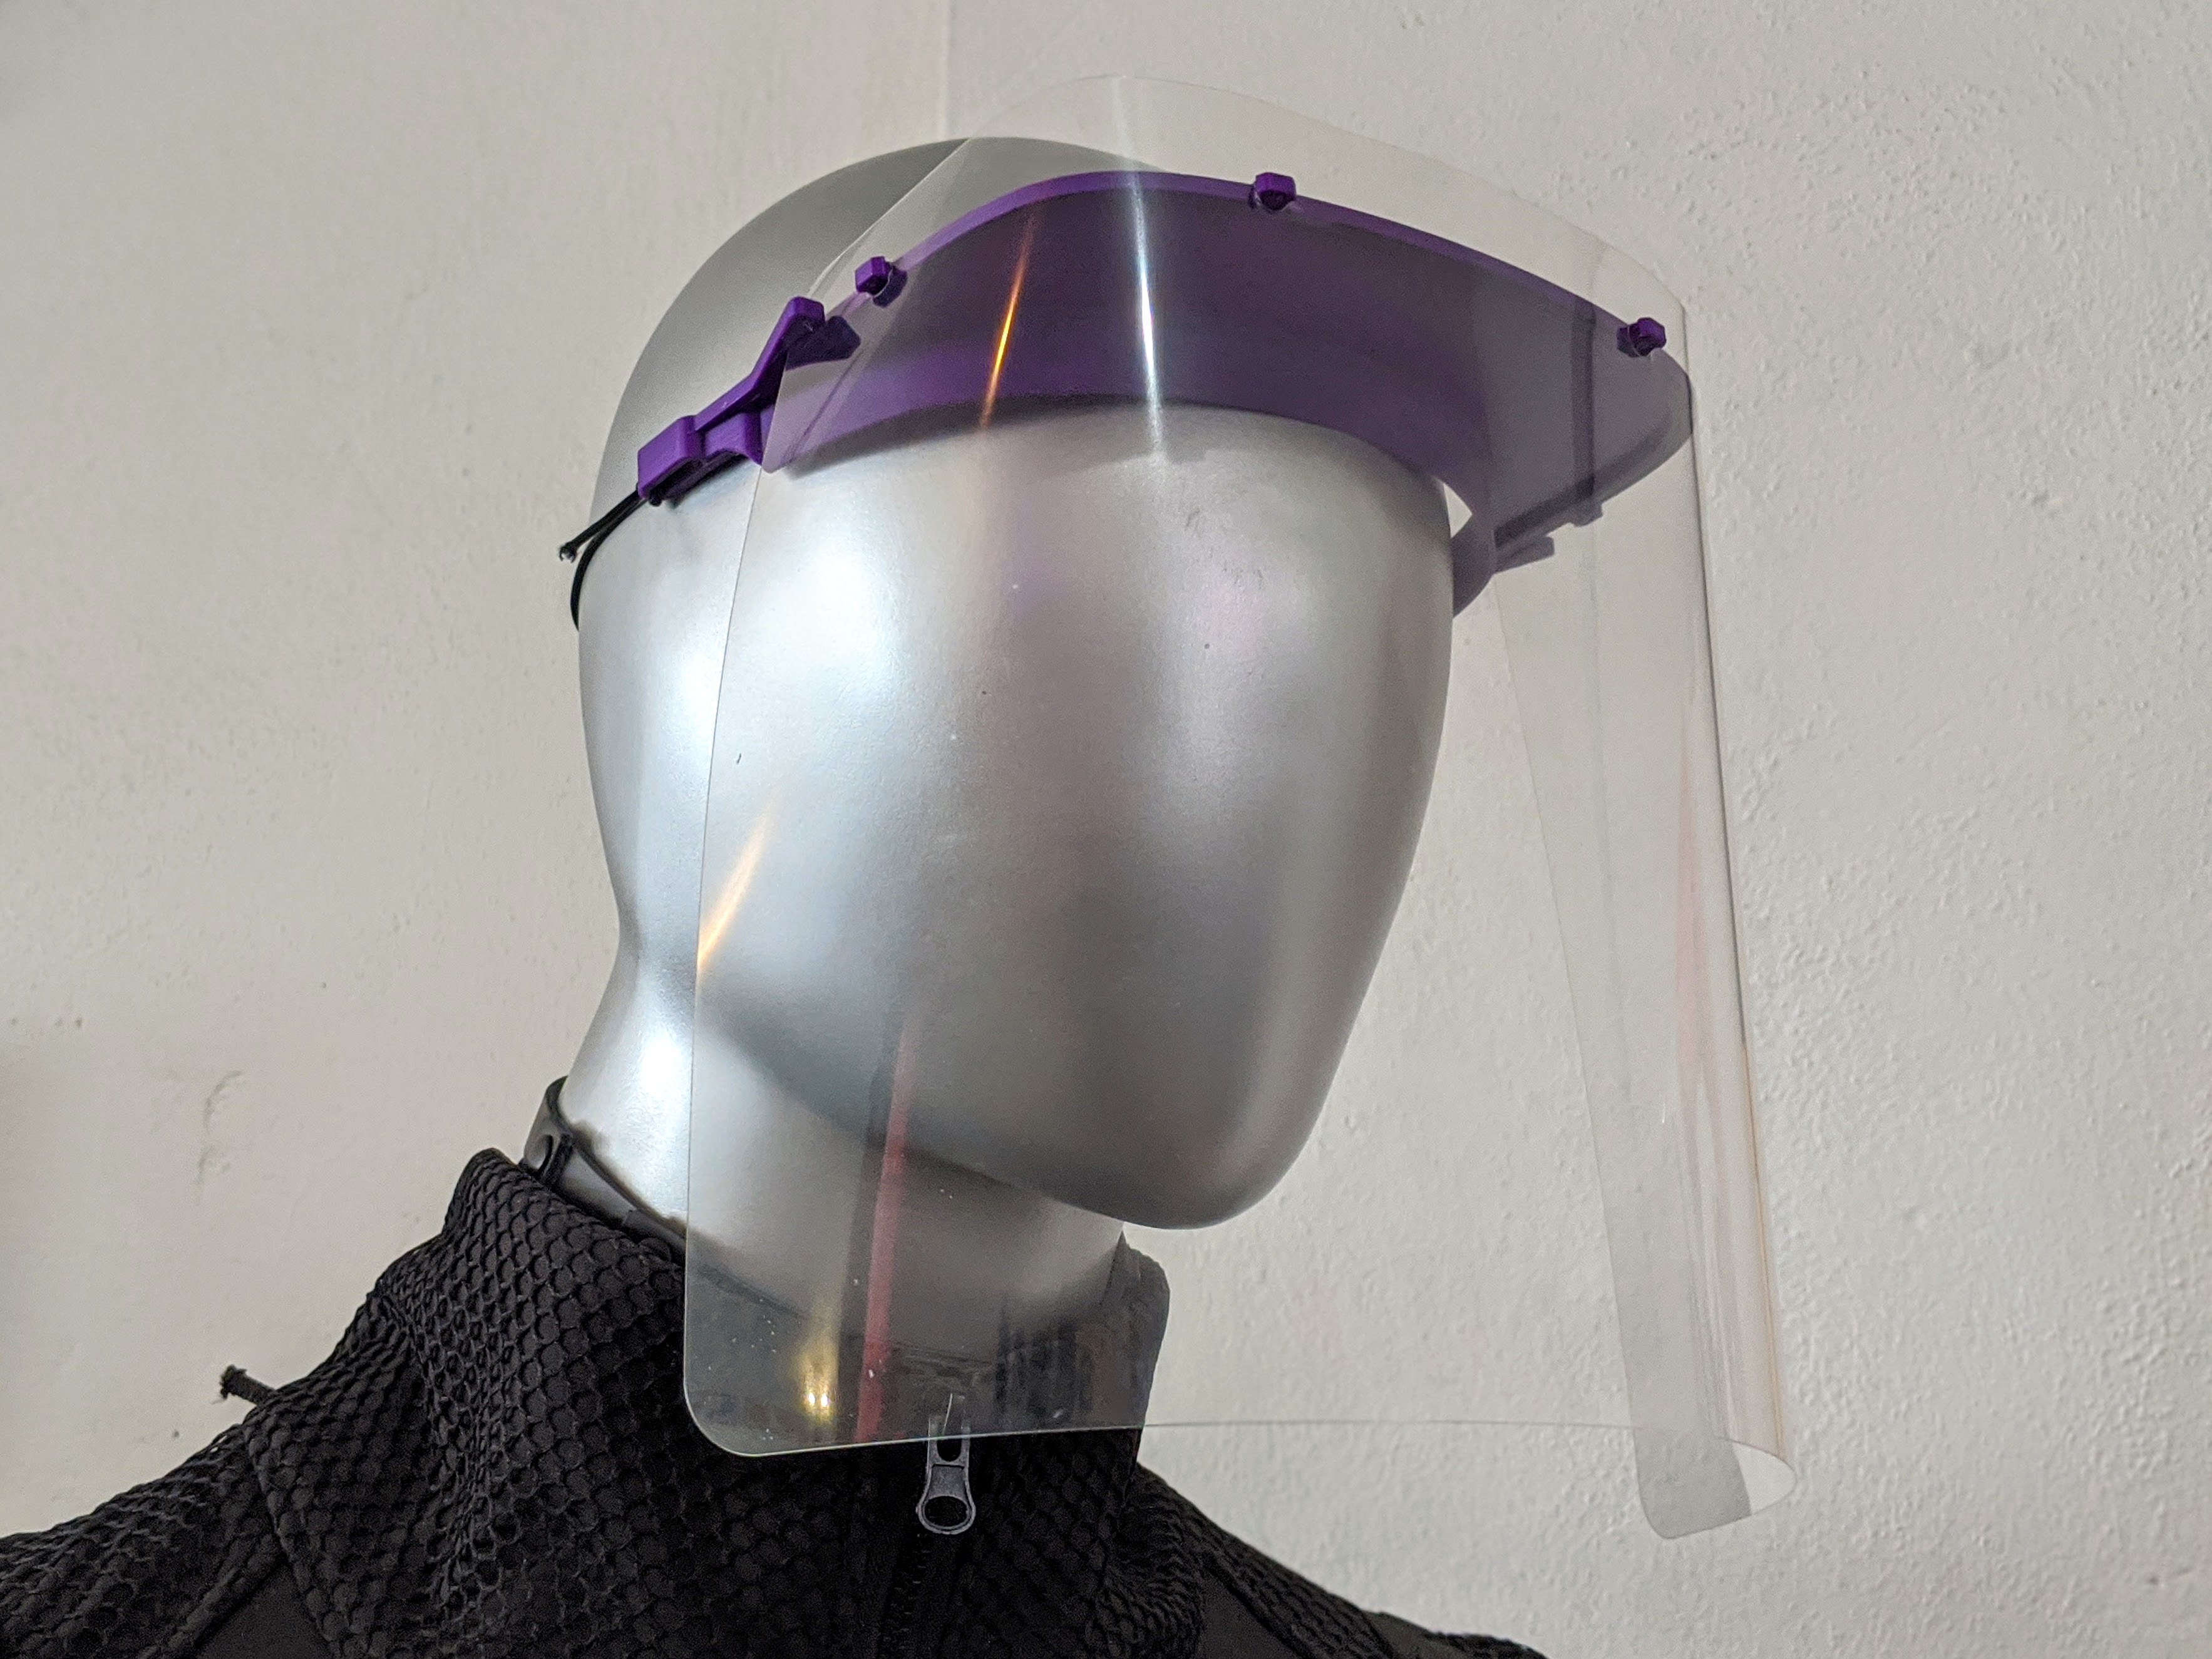 NIH-approved Budmen Face Shield